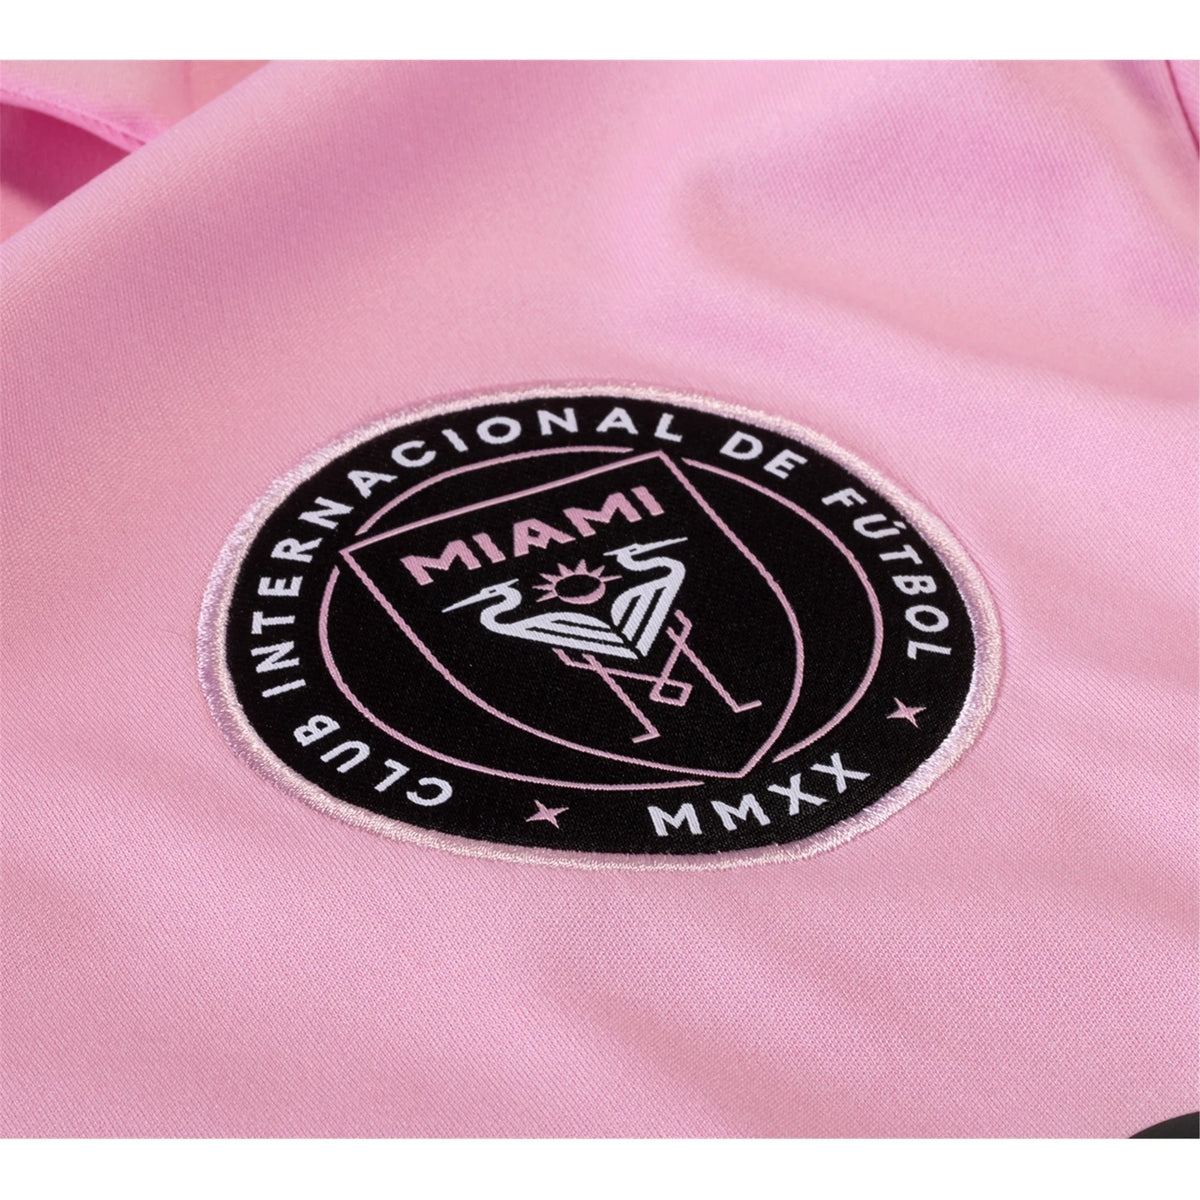 adidas Inter Miami Leonardo Campana Home Jersey 23/24 w/ MLS + Leagues Cup Patch + Match Details (True Pink/Black)